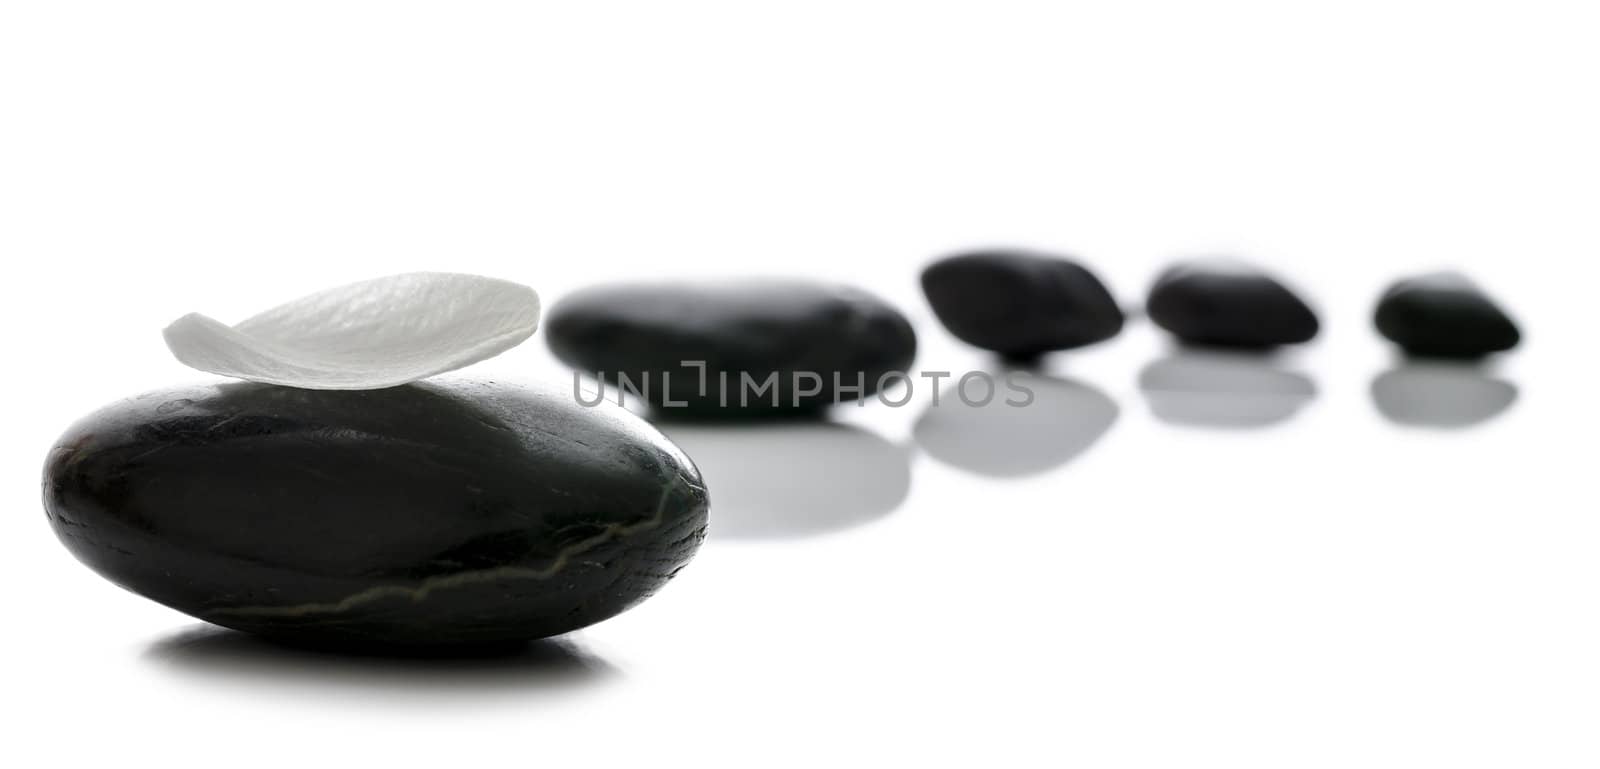 Black spa stones in a row by Gajus